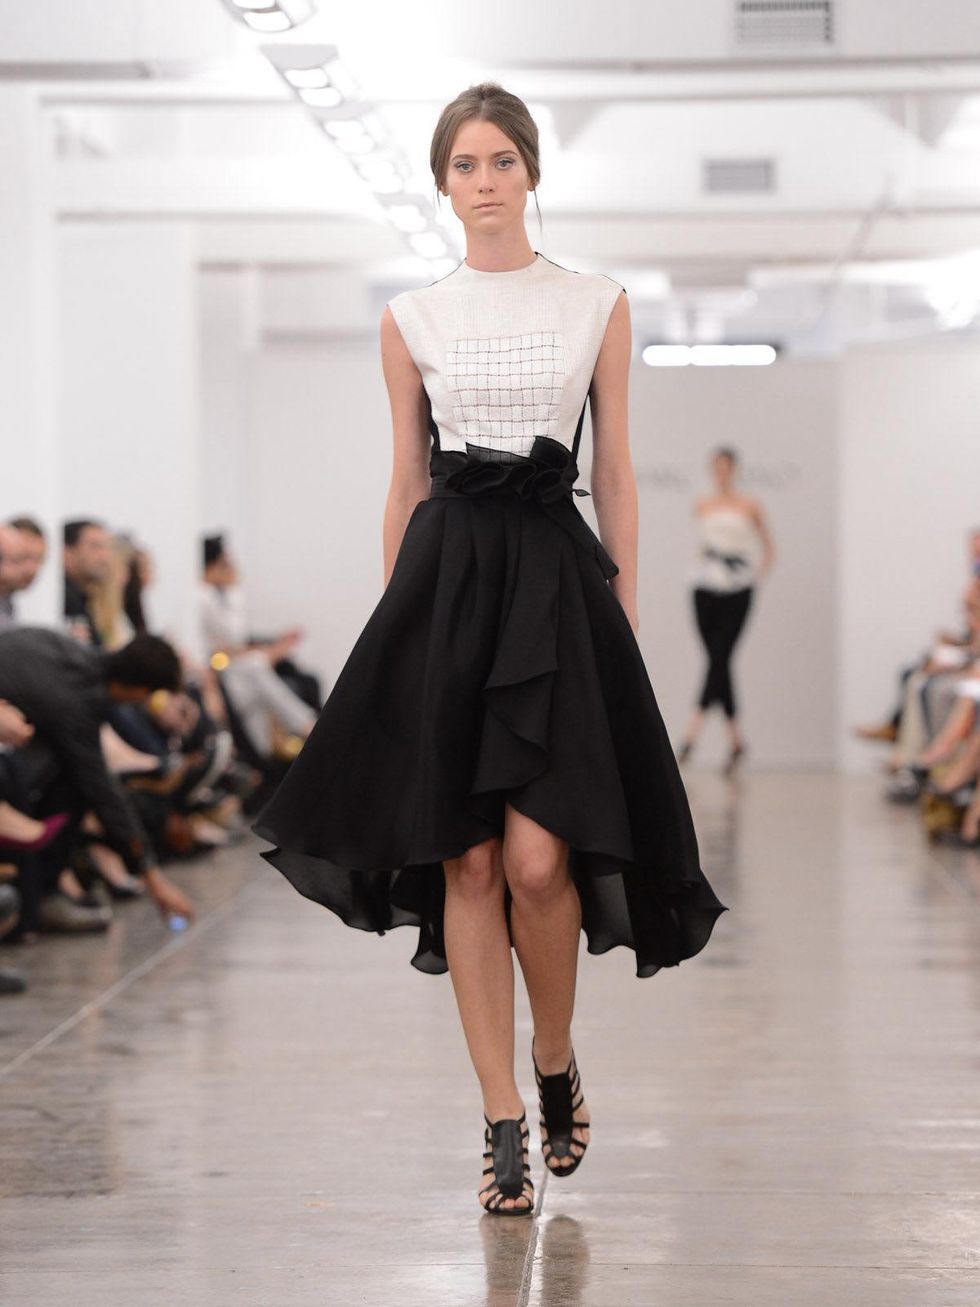 Clifford, Fashion Week spring 2013, Carmen Marc Valvo, black skirt with white blouse